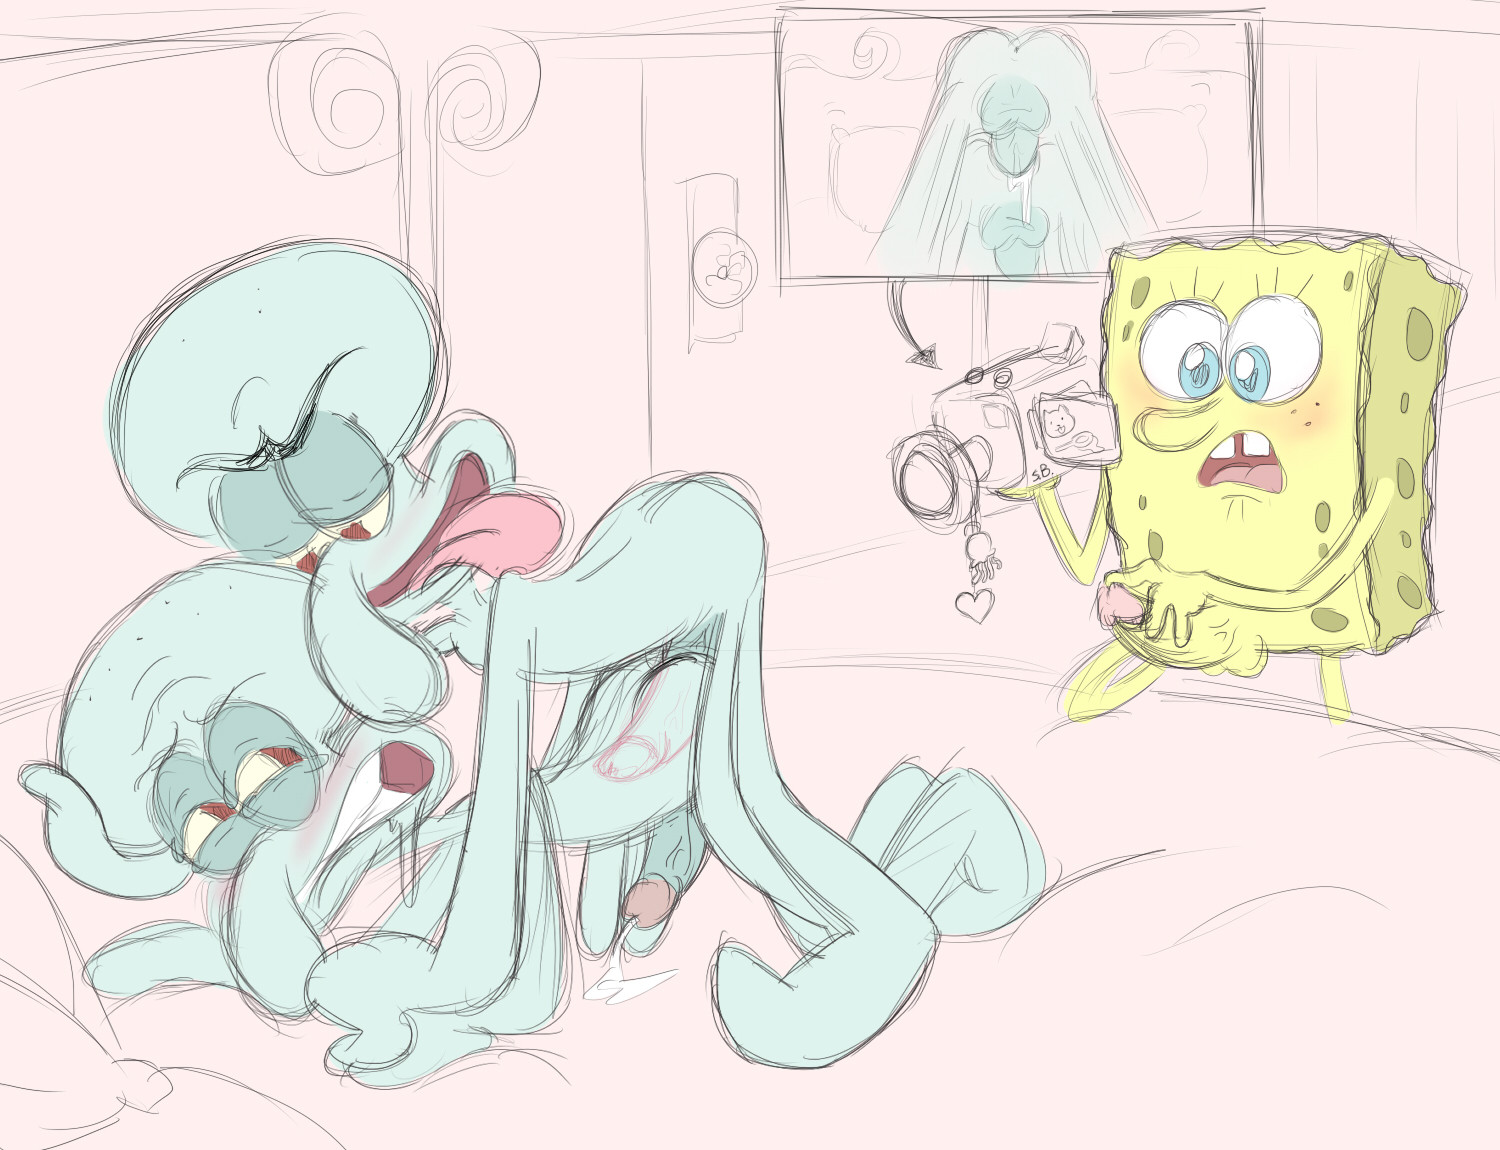 Spongebob And Patrick Fucking